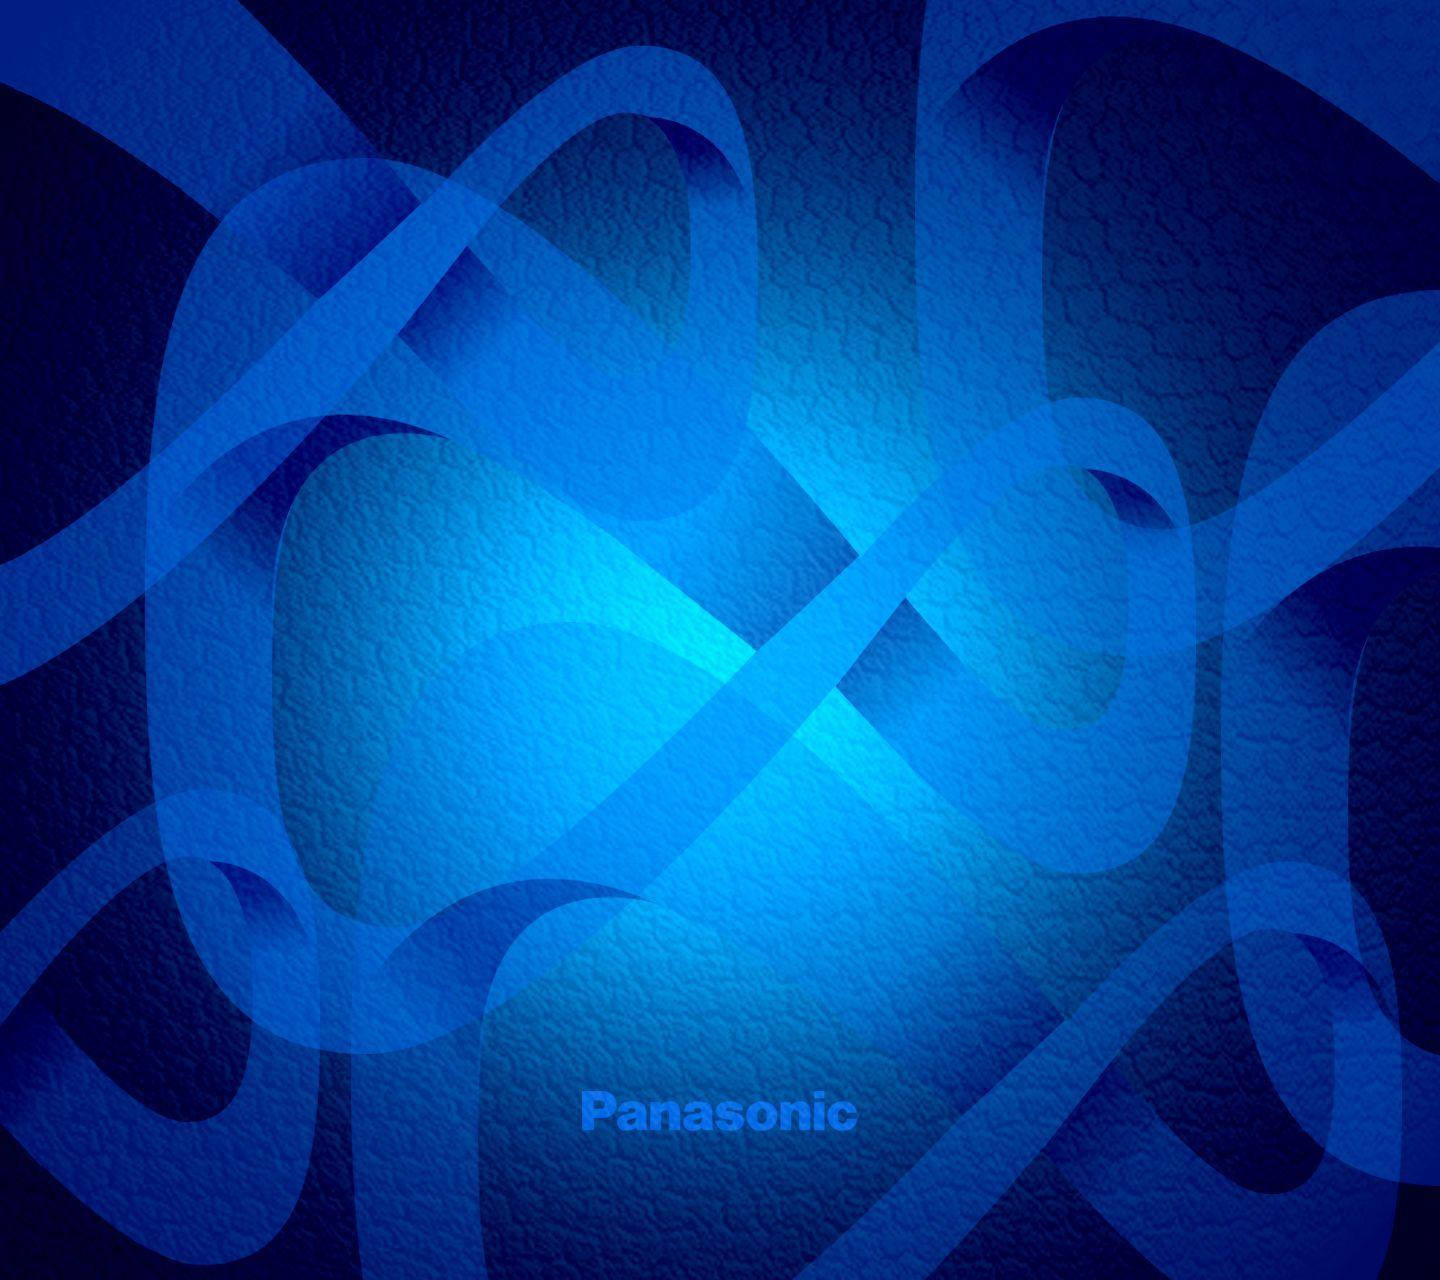 Free Panasonic Wallpaper Downloads 100 Panasonic Wallpapers For Free Wallpapers Com